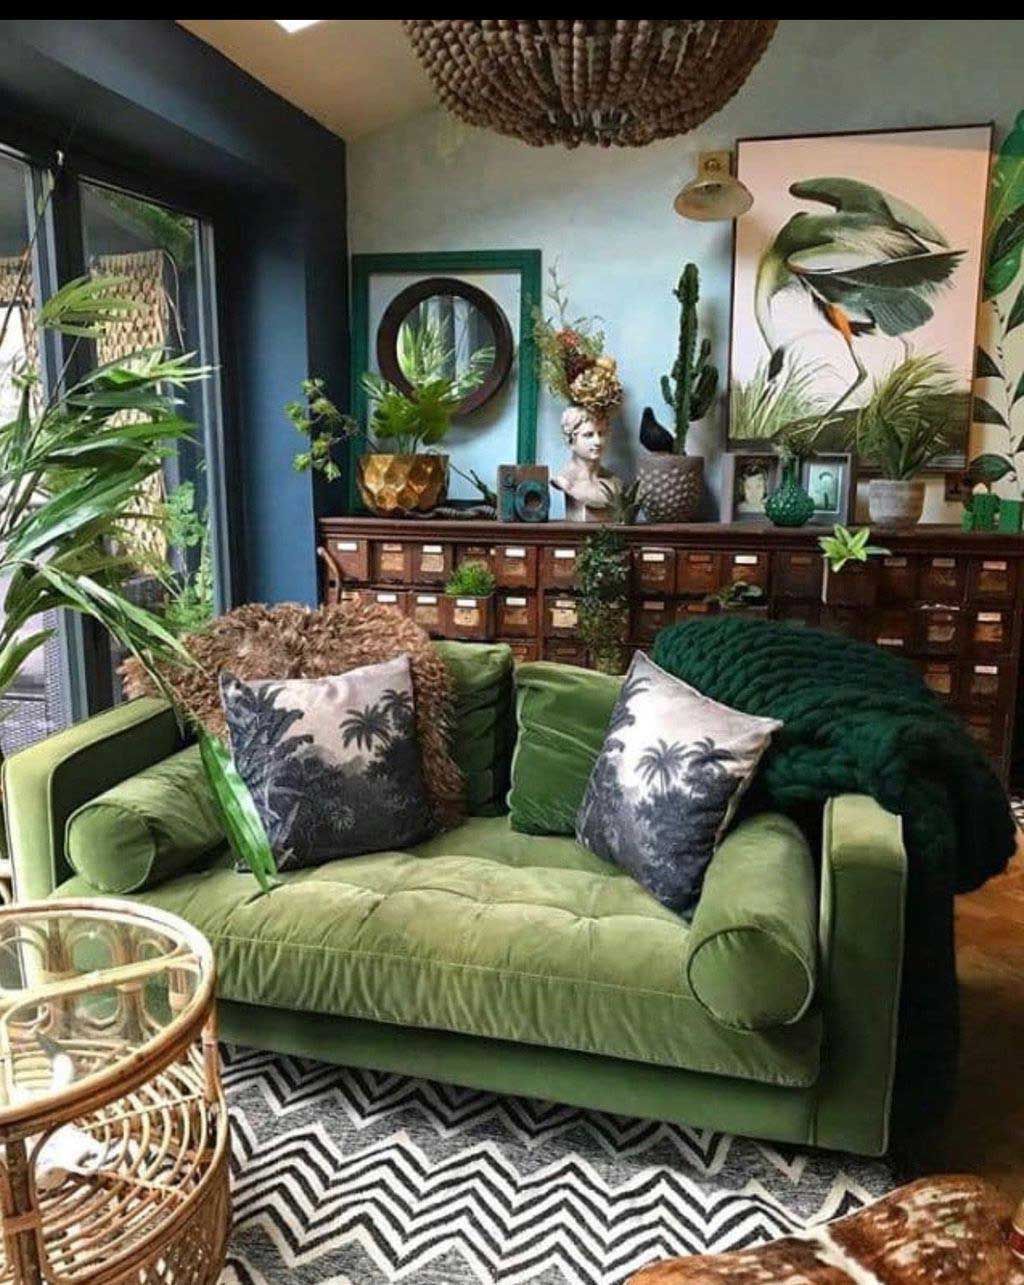 50 Beautiful Bohemian Decor Ideas For Living Room 28 - Best Home Design Ideas -   16 room decor Green home ideas